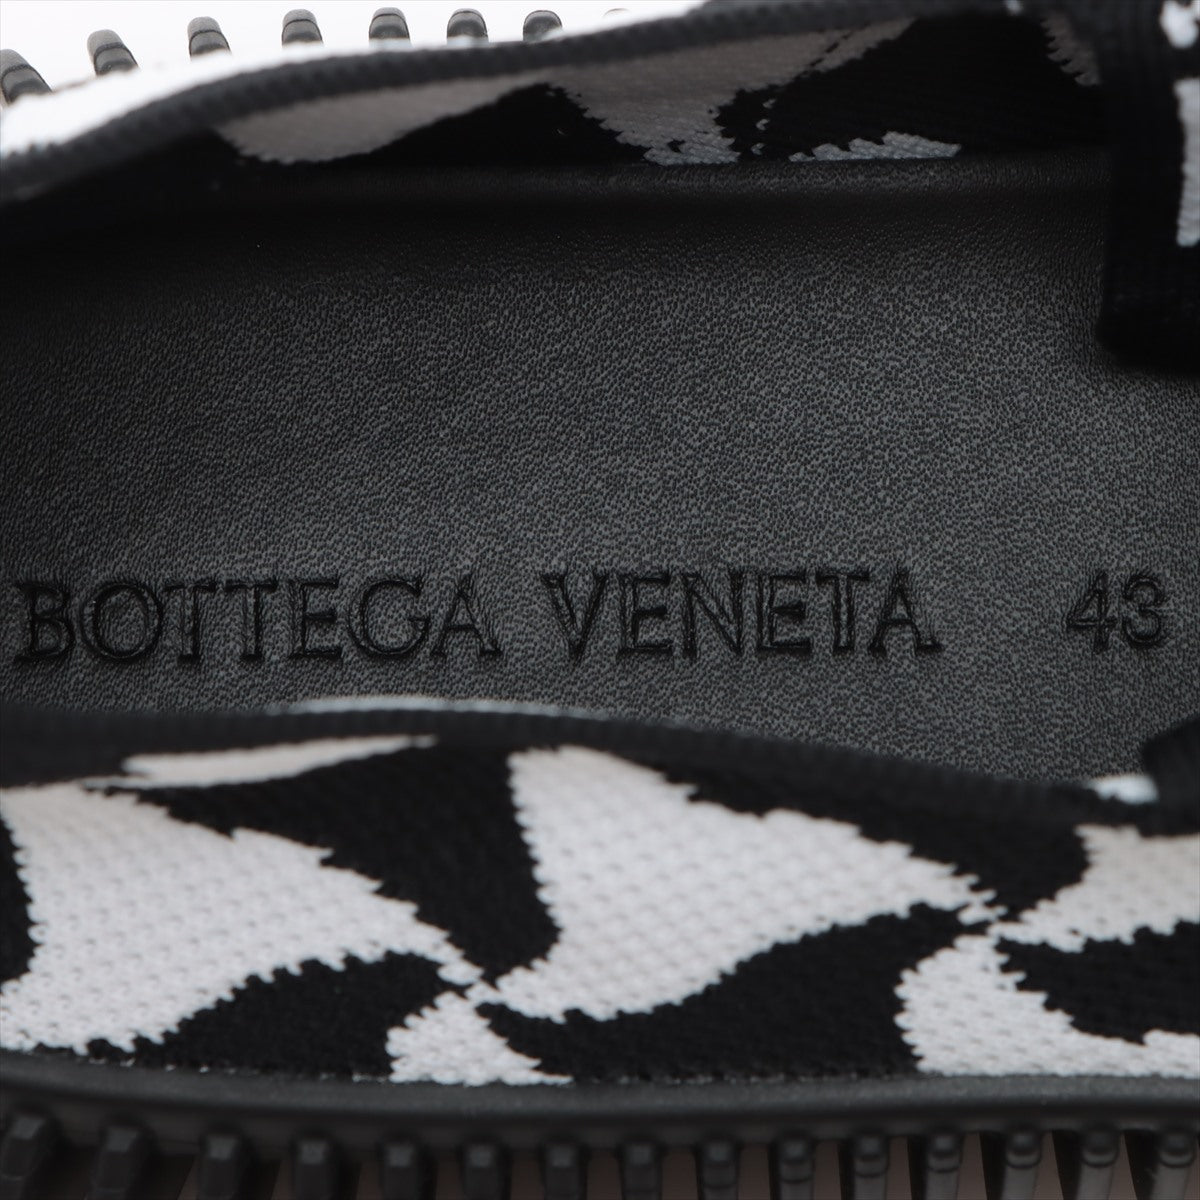 Bottega Veneta Fabric Slippon 43 男士 黑色 x 白色格子拖鞋